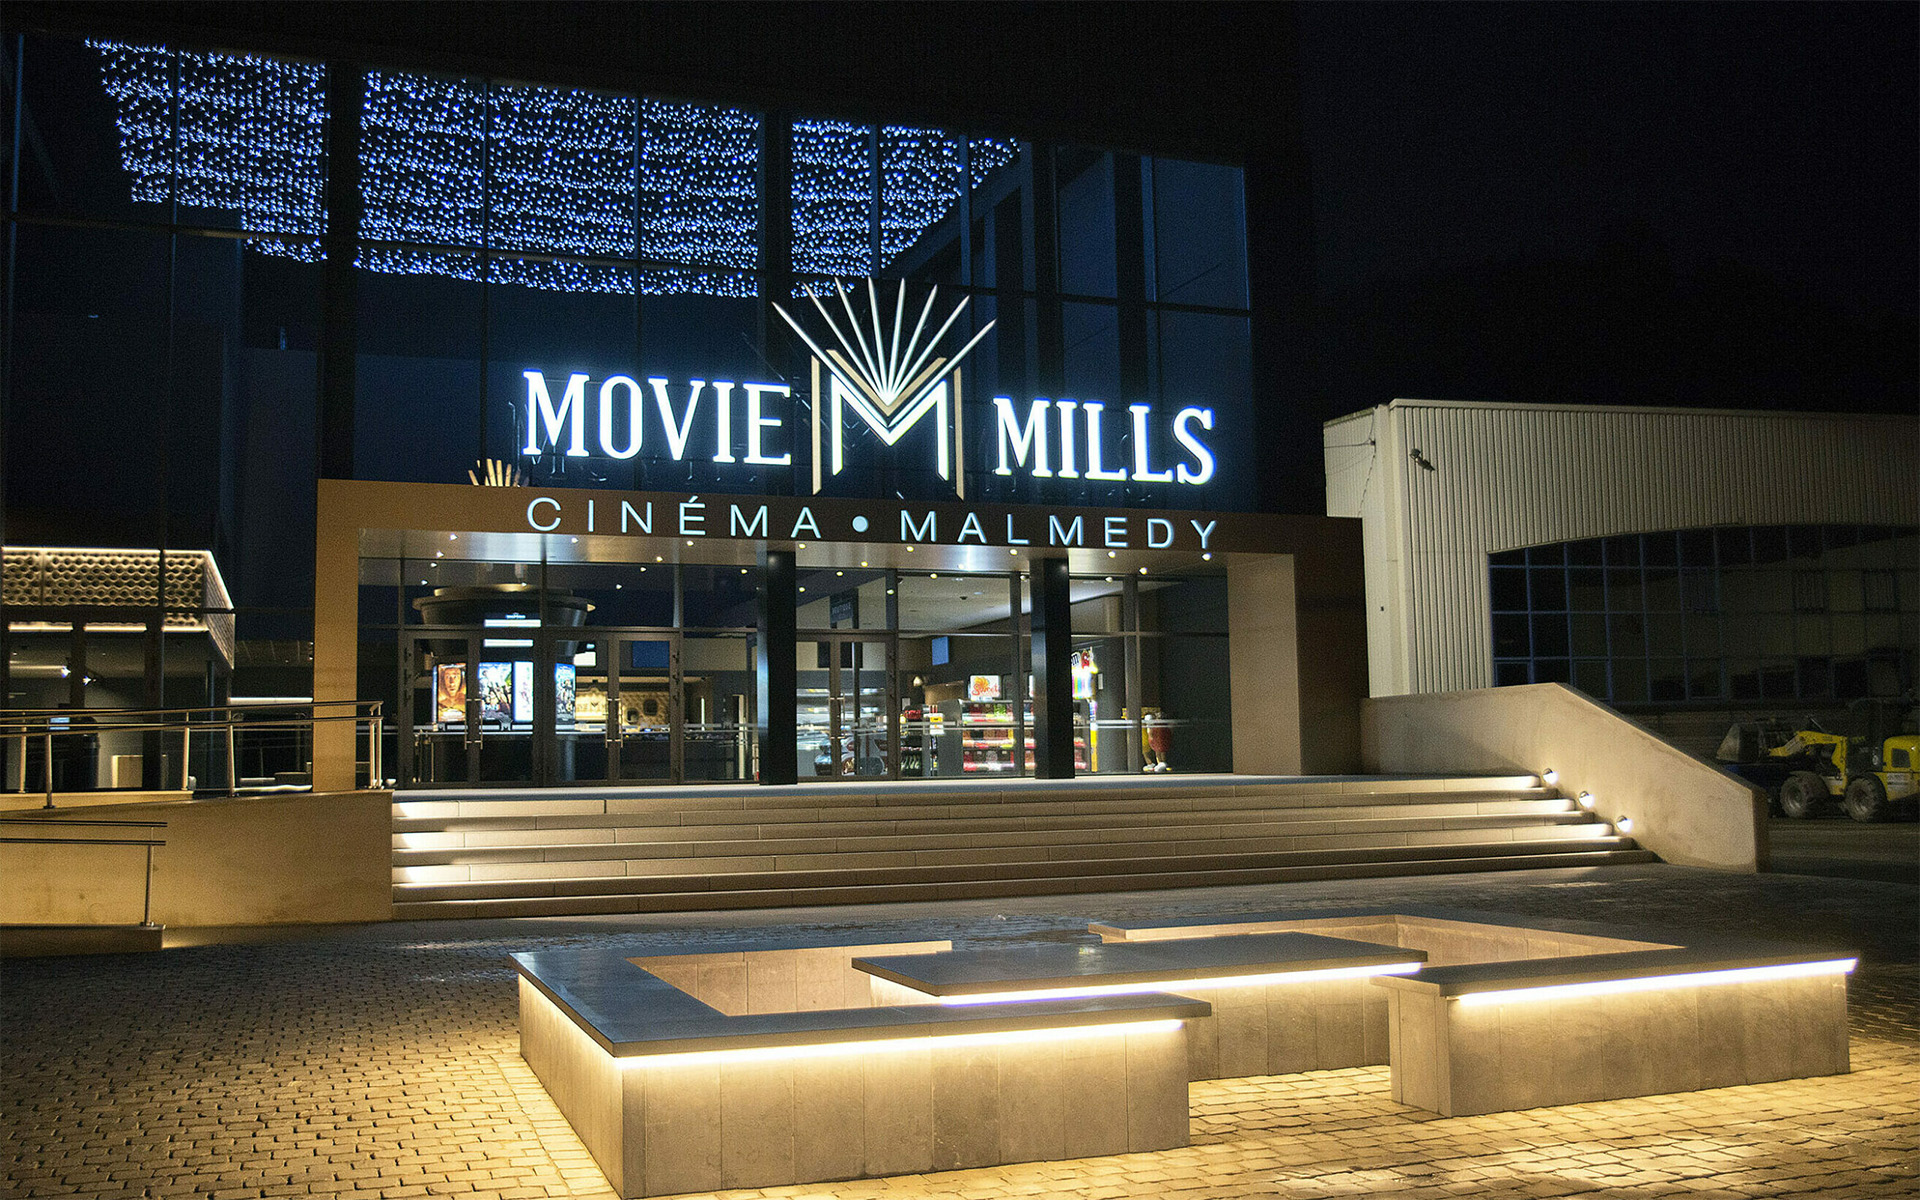 29 Salles Cinema Moviemills Intermills Group Malmedy 01